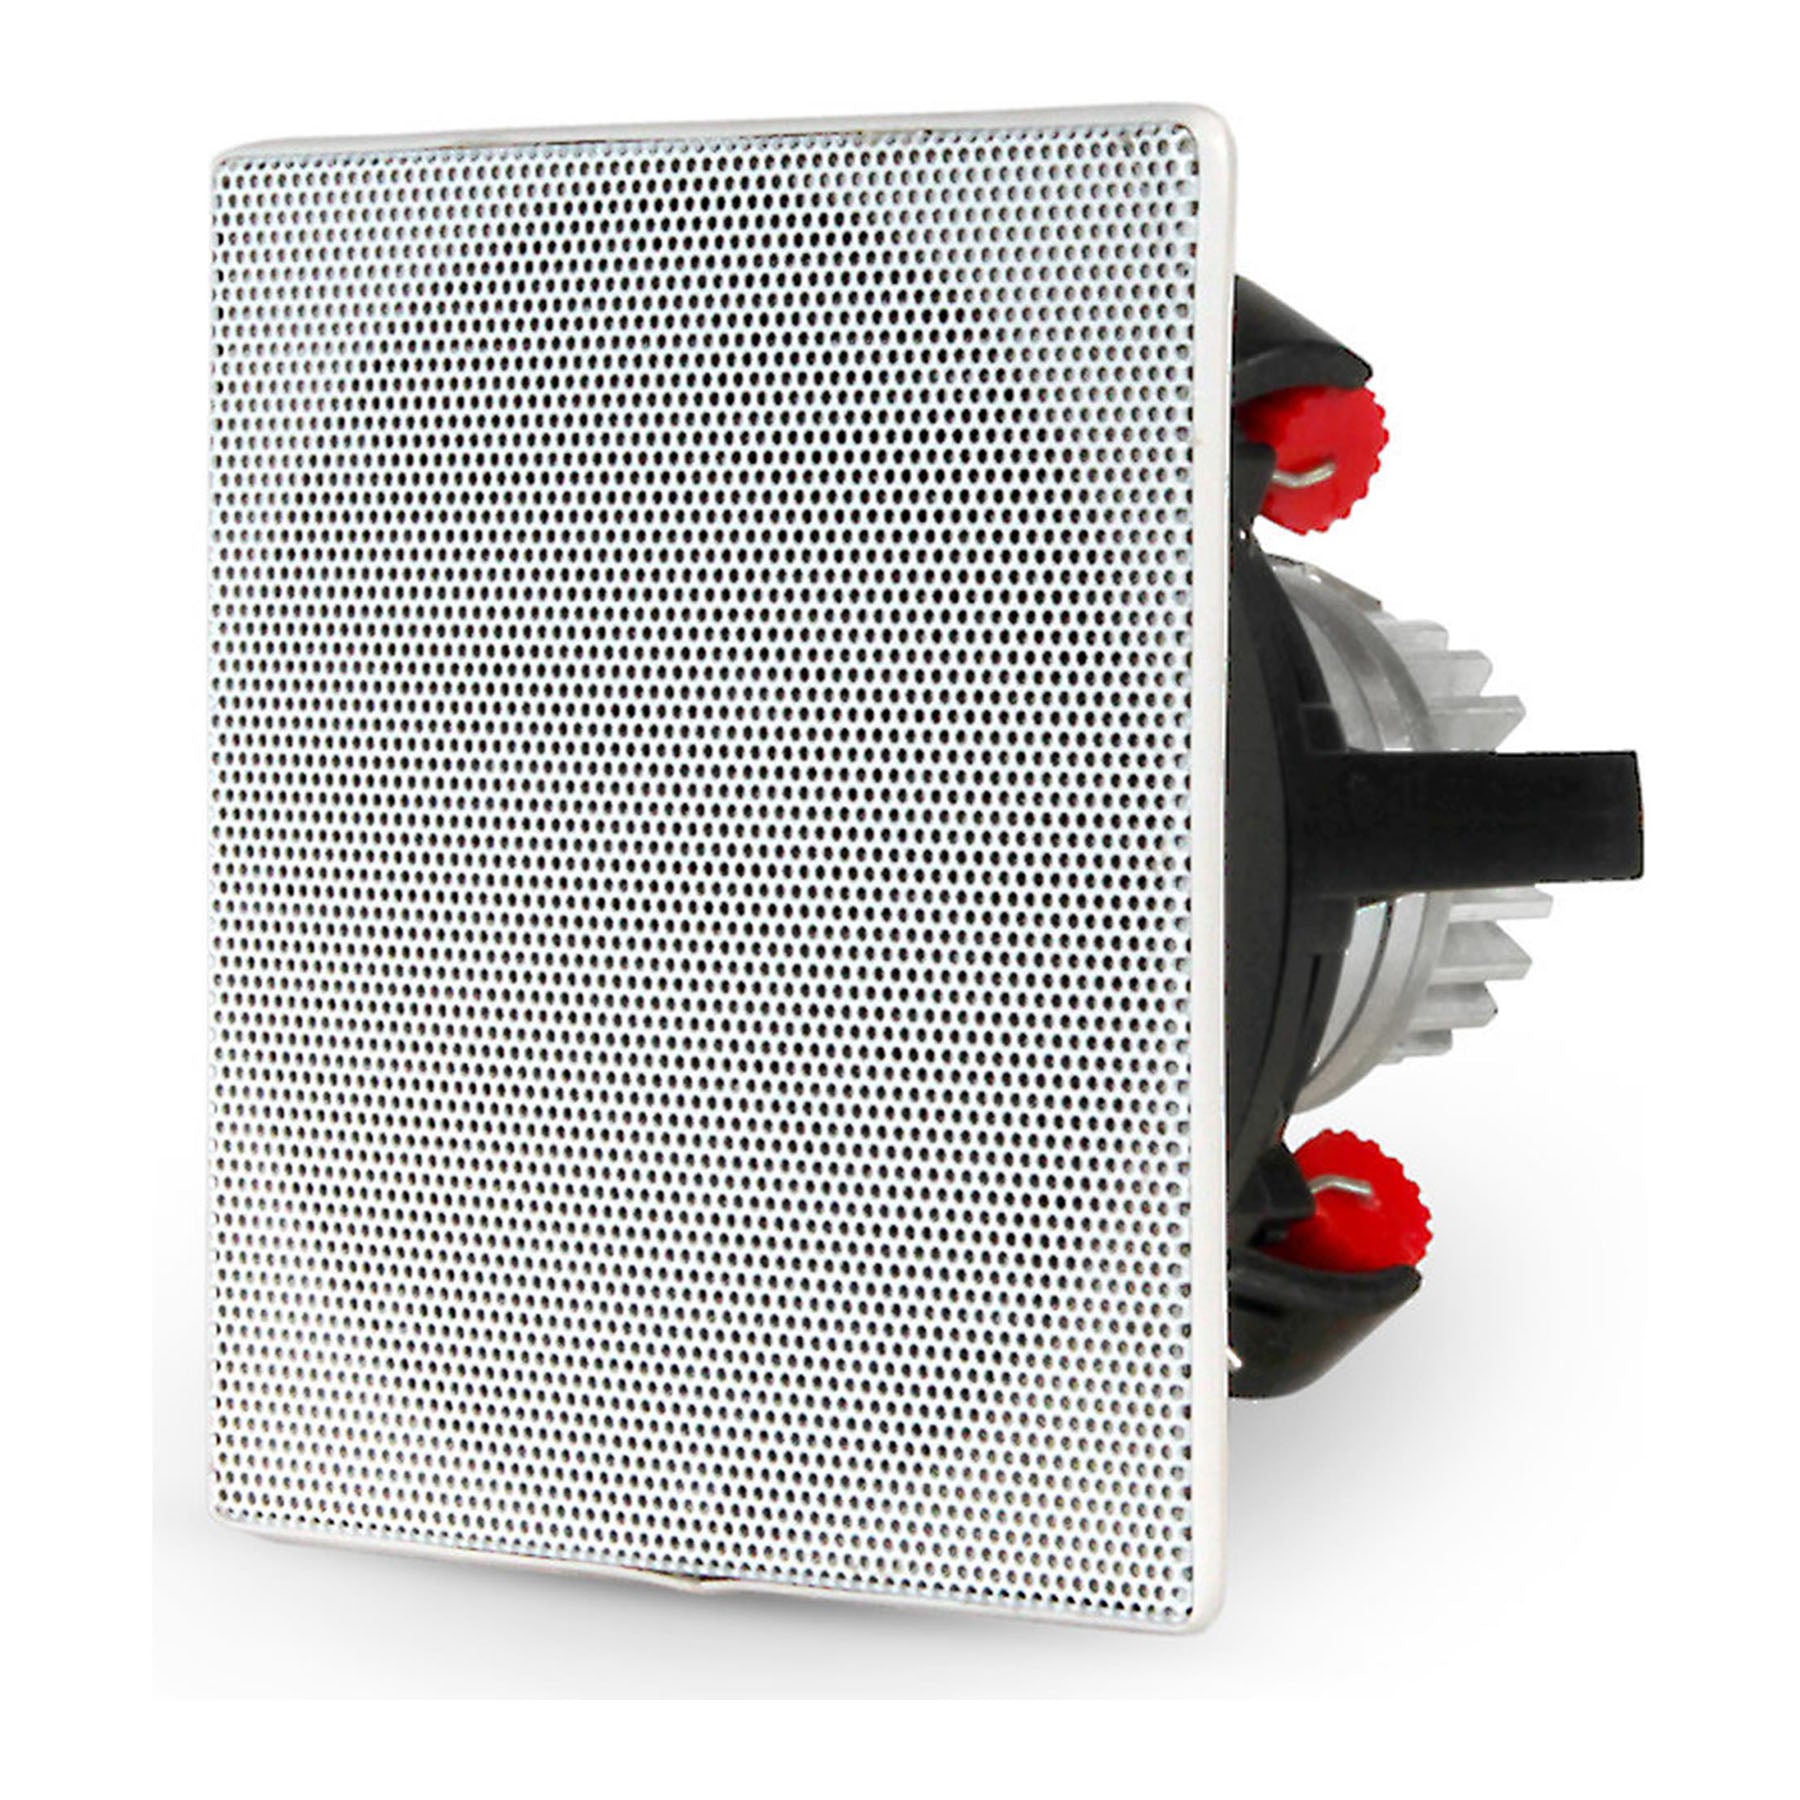 Revel C540 Specialty In-Ceiling Loudspeaker